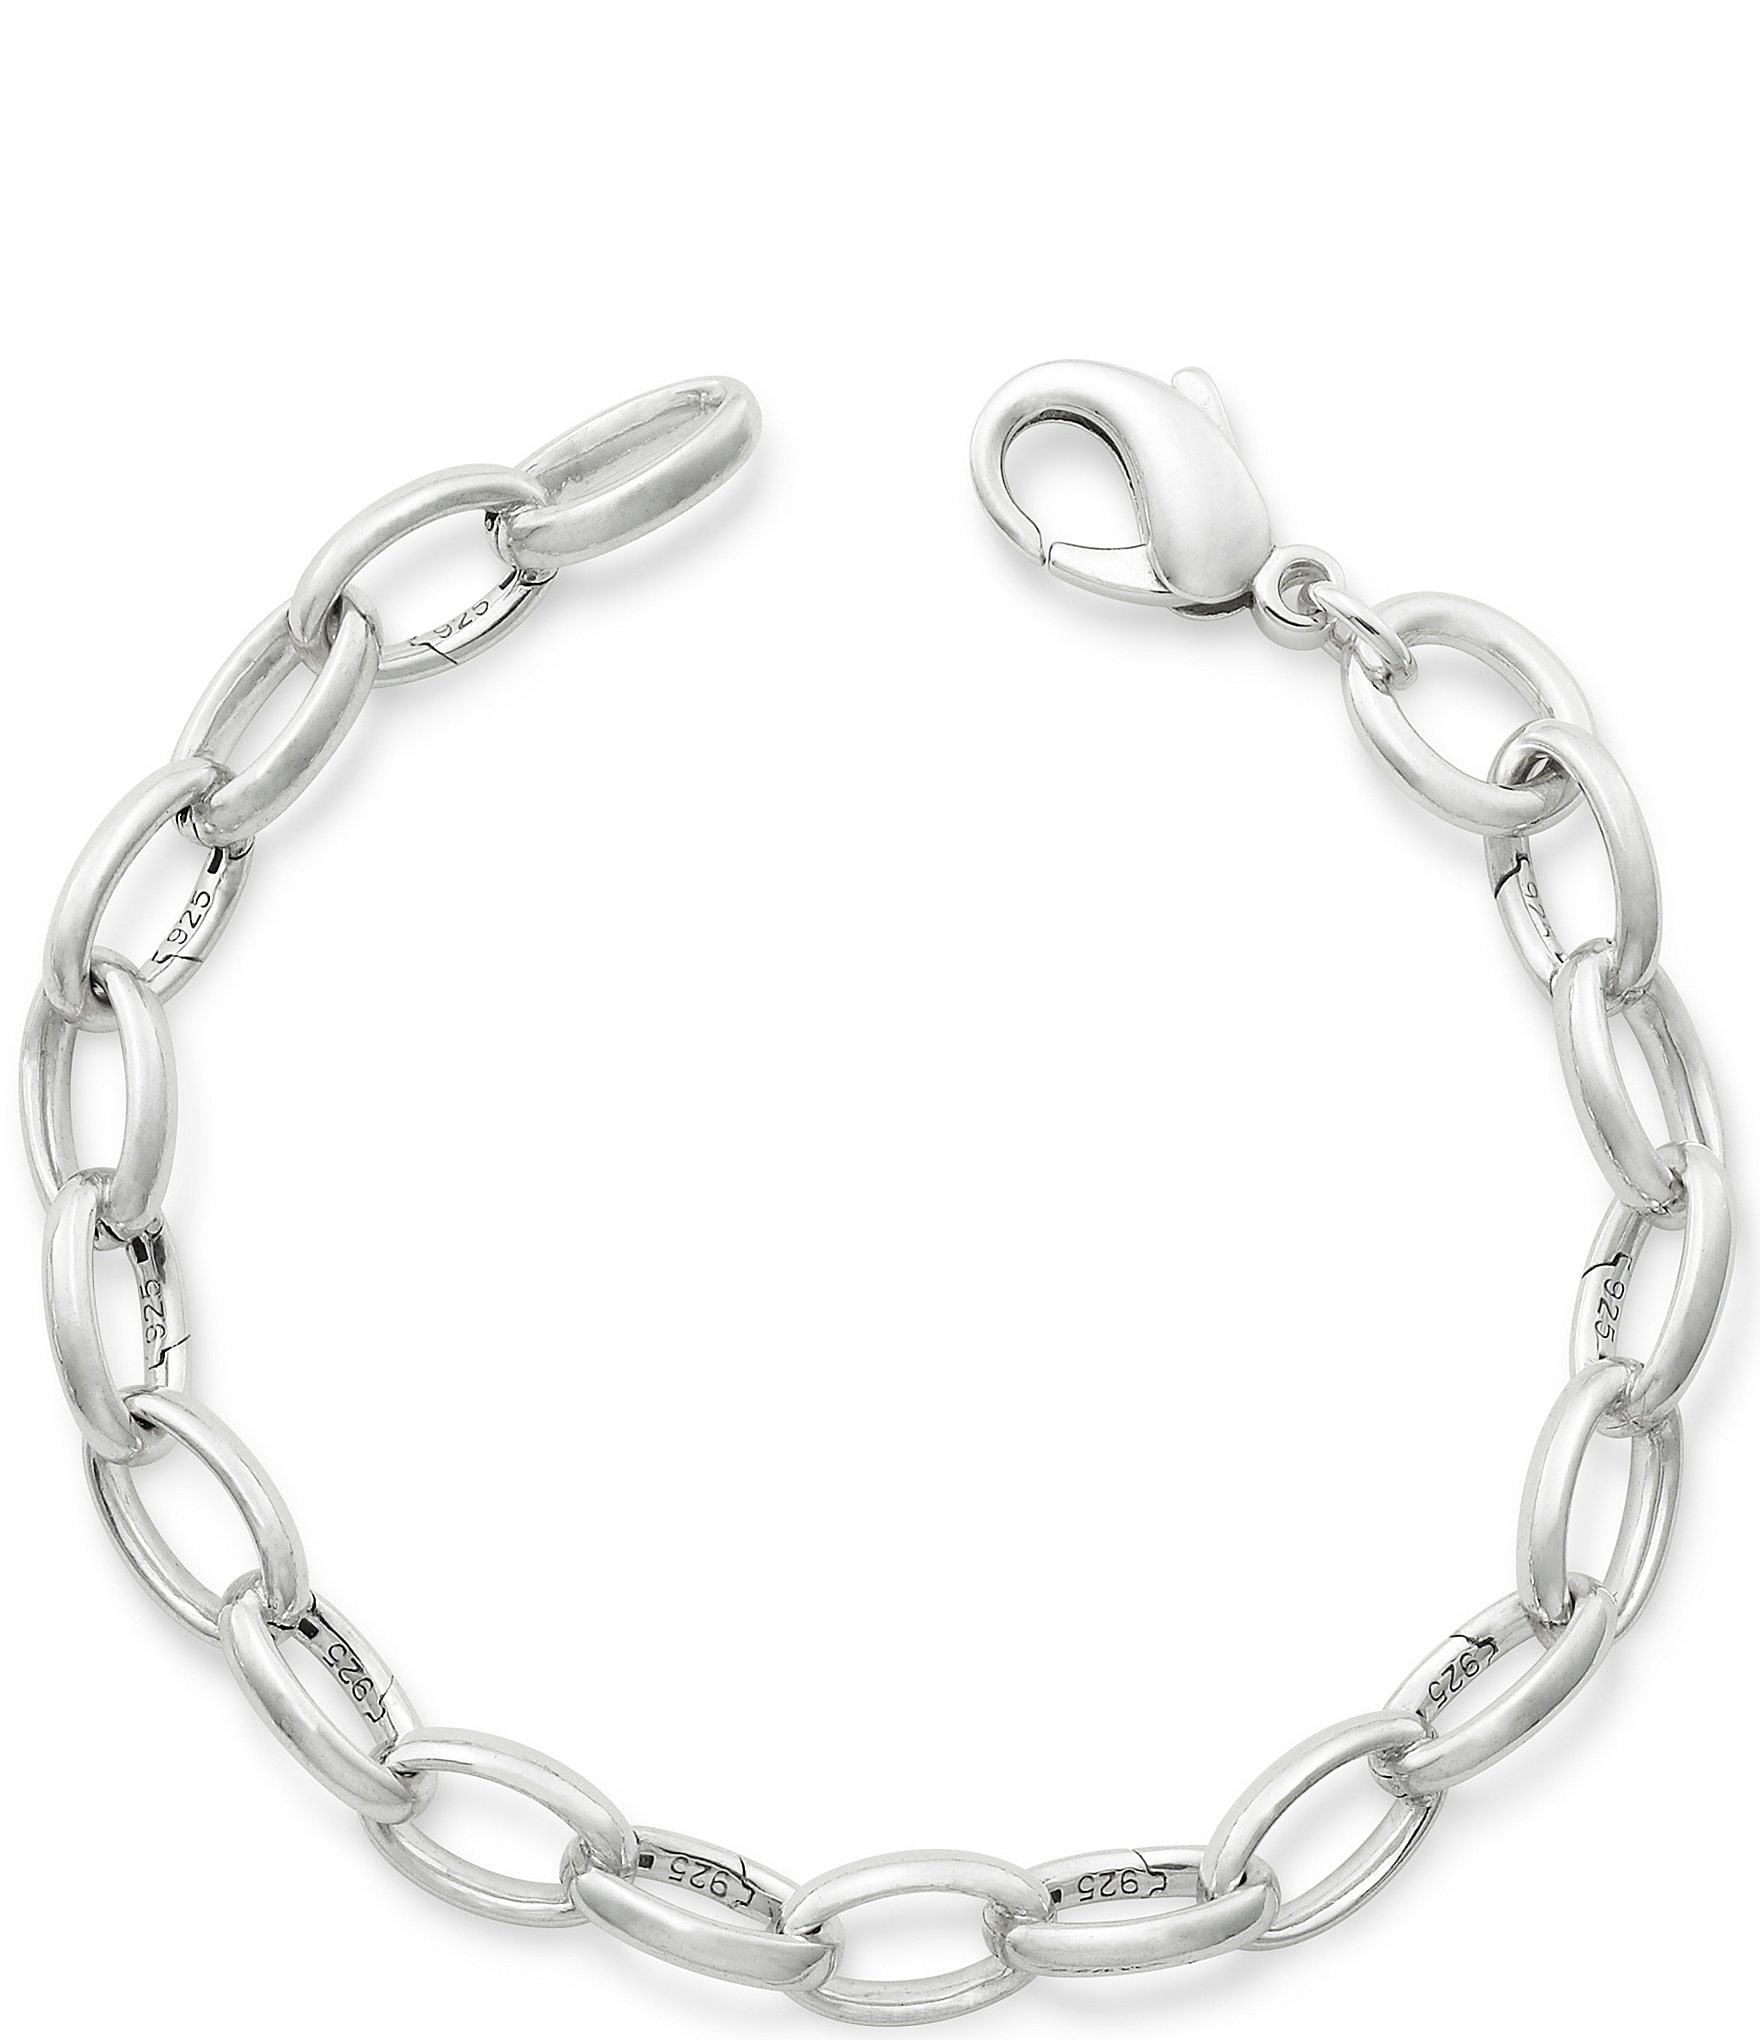 Charm bracelet: Sterling silver